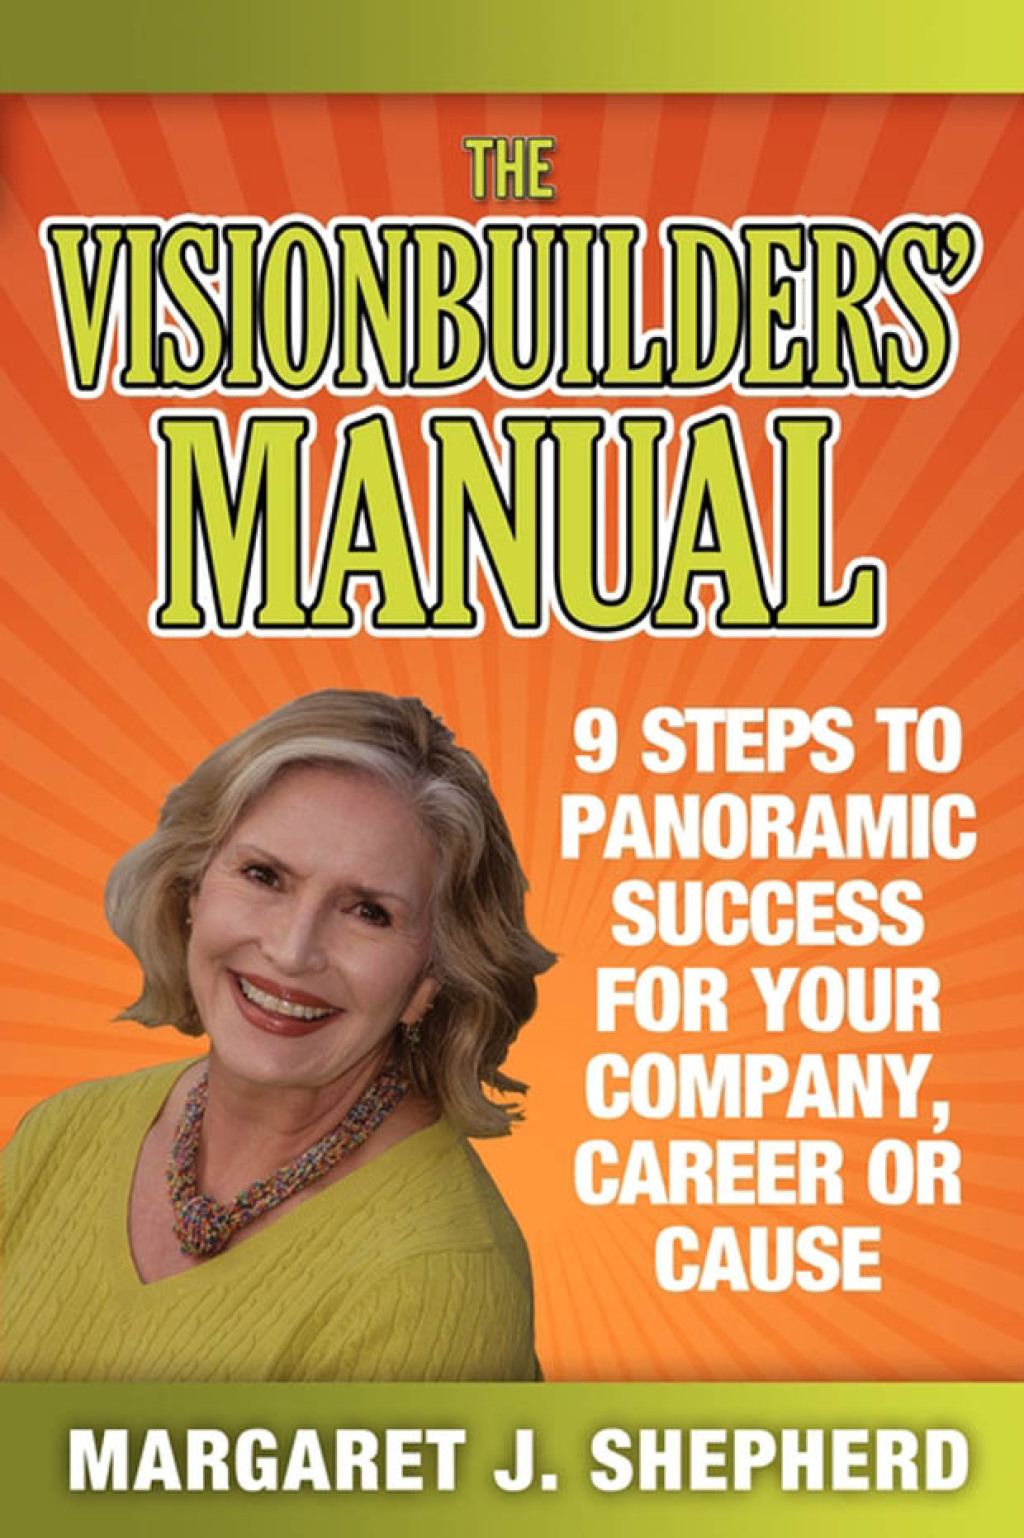 The Visionbuilders' Manual (eBook) - Margaret J. Shepherd